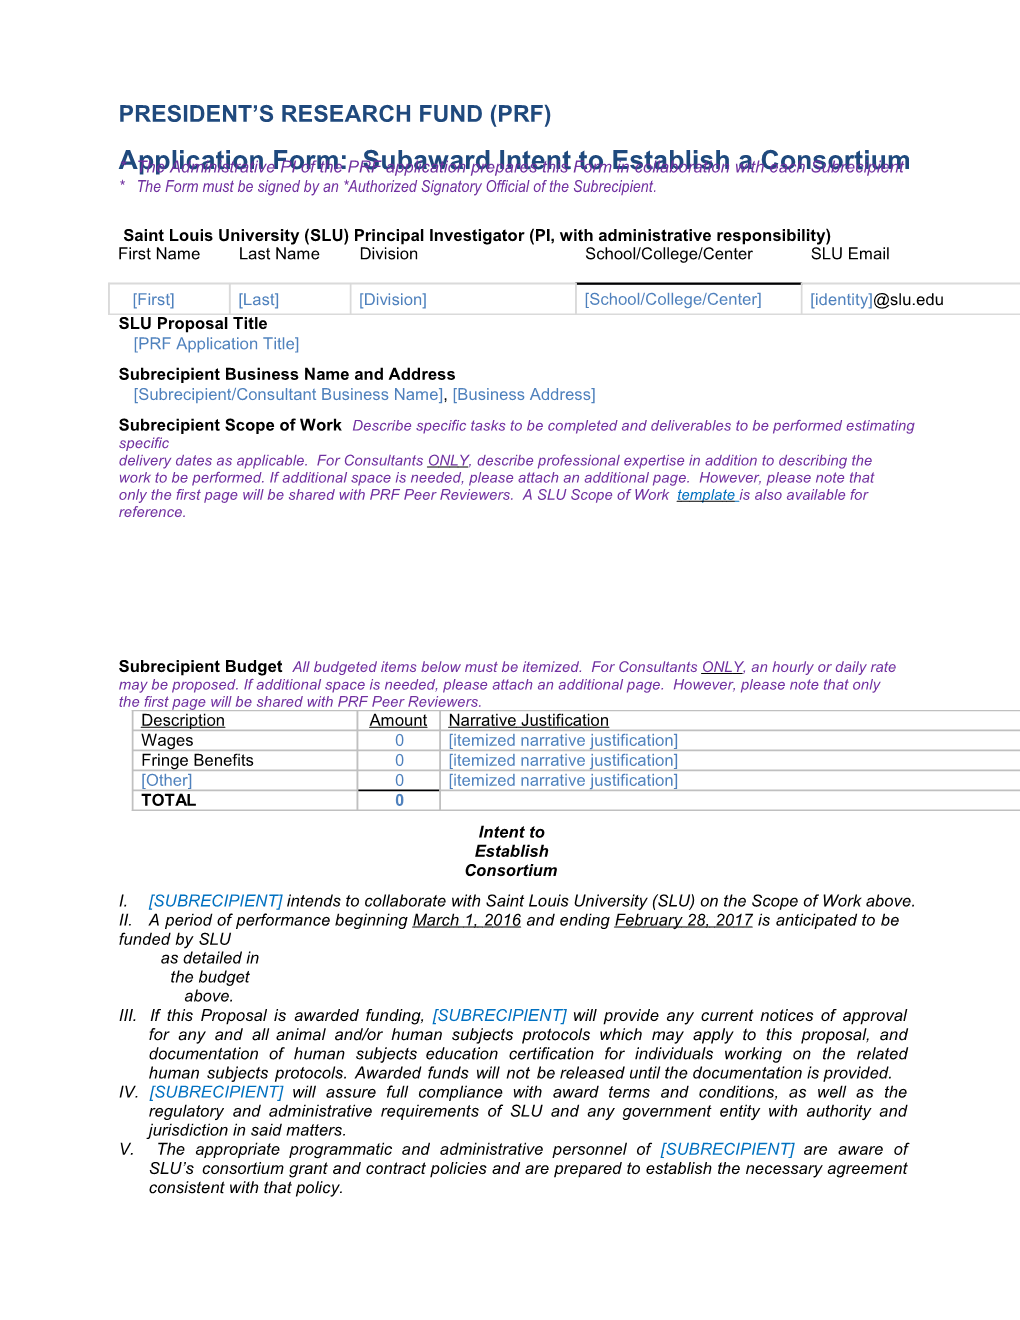 Applicationform:Subawardintenttoestablishaconsortium